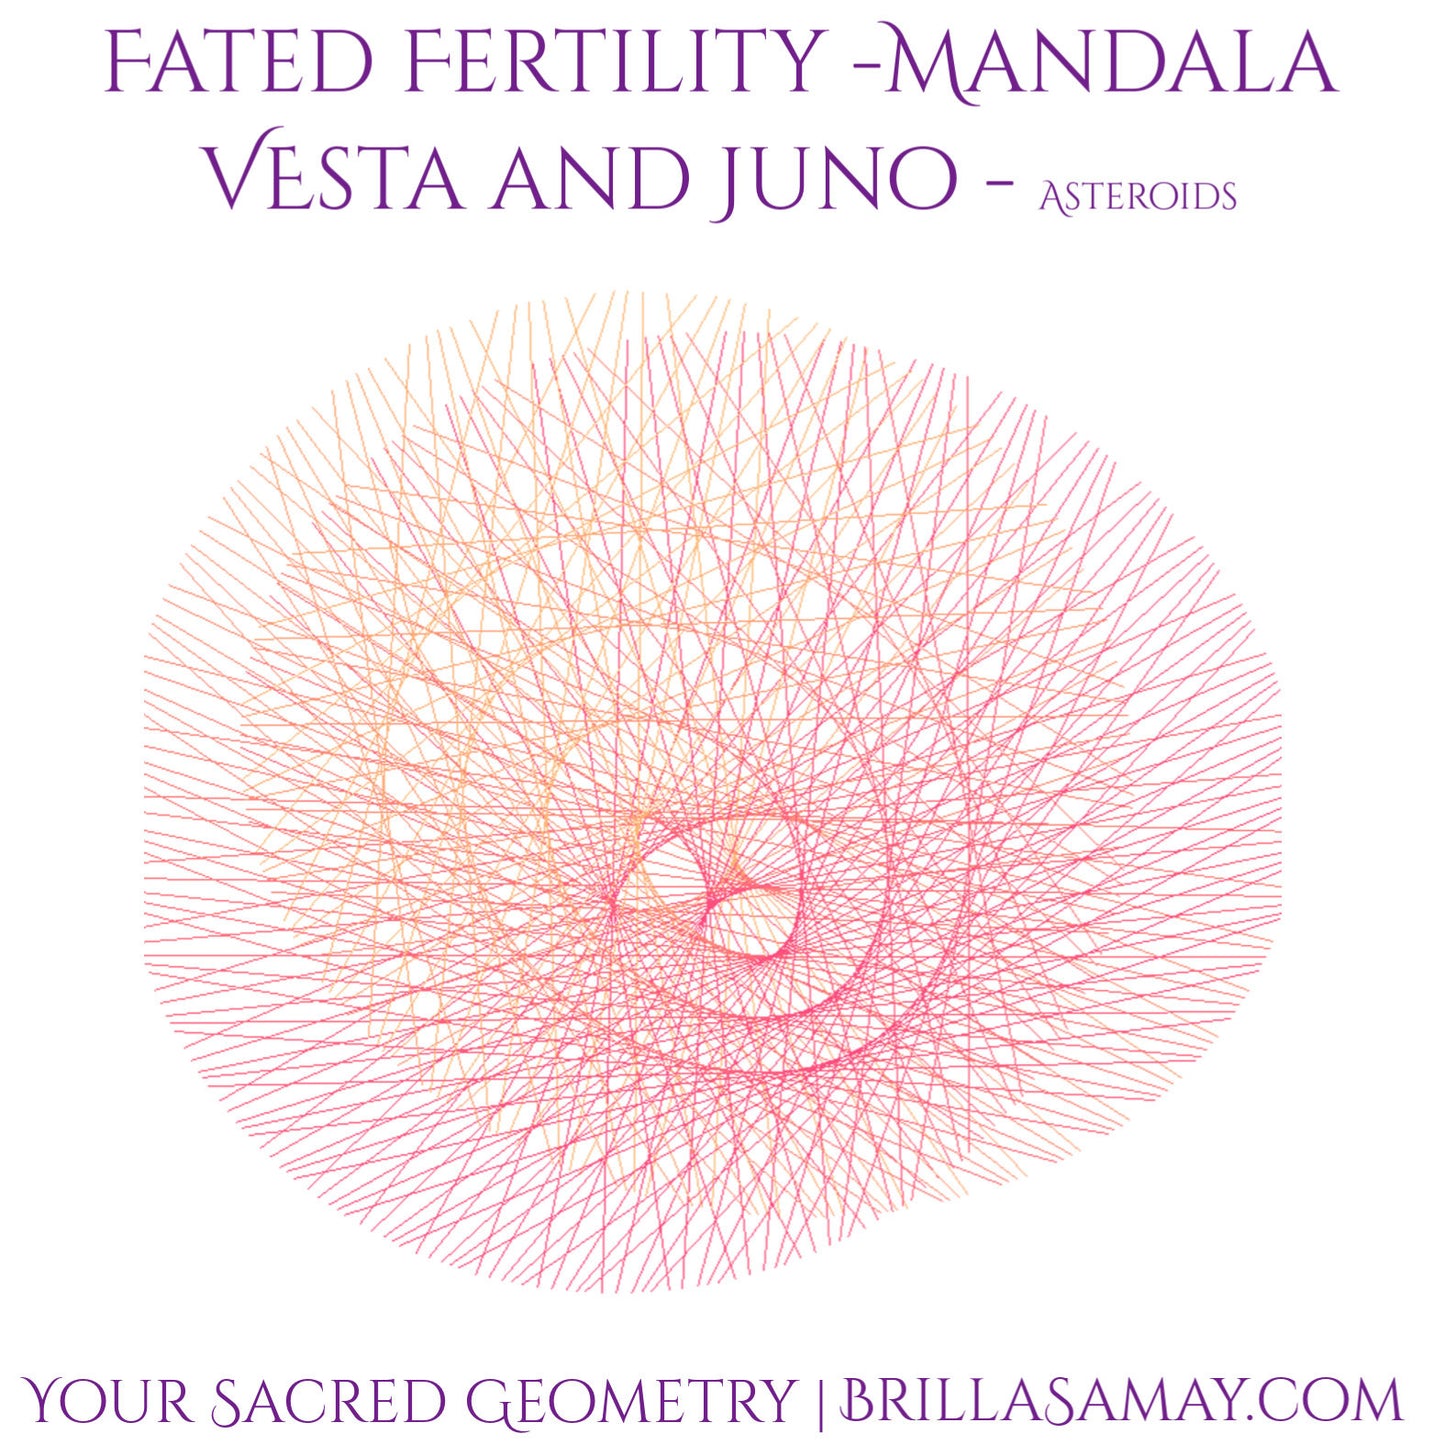 Spiritual Mandalas - View Your Sacred Geometry